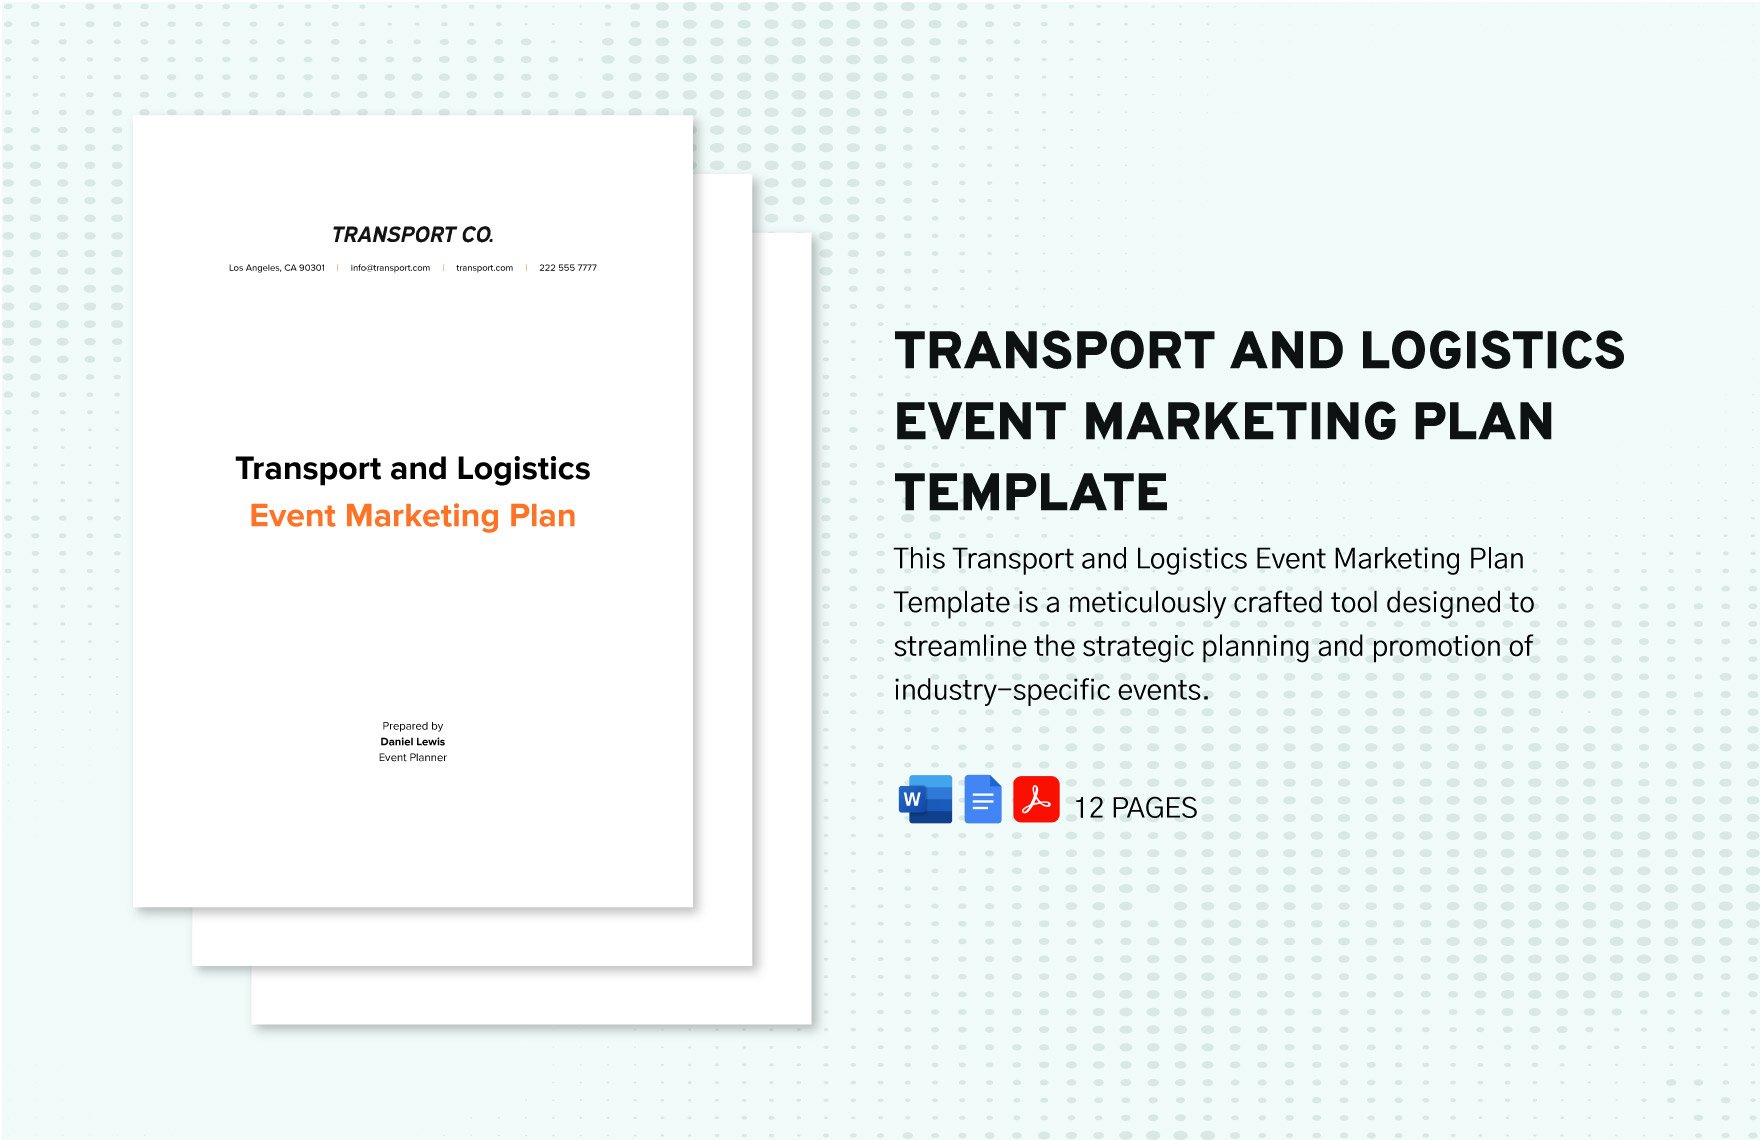 Transport and Logistics Event Marketing Plan Template